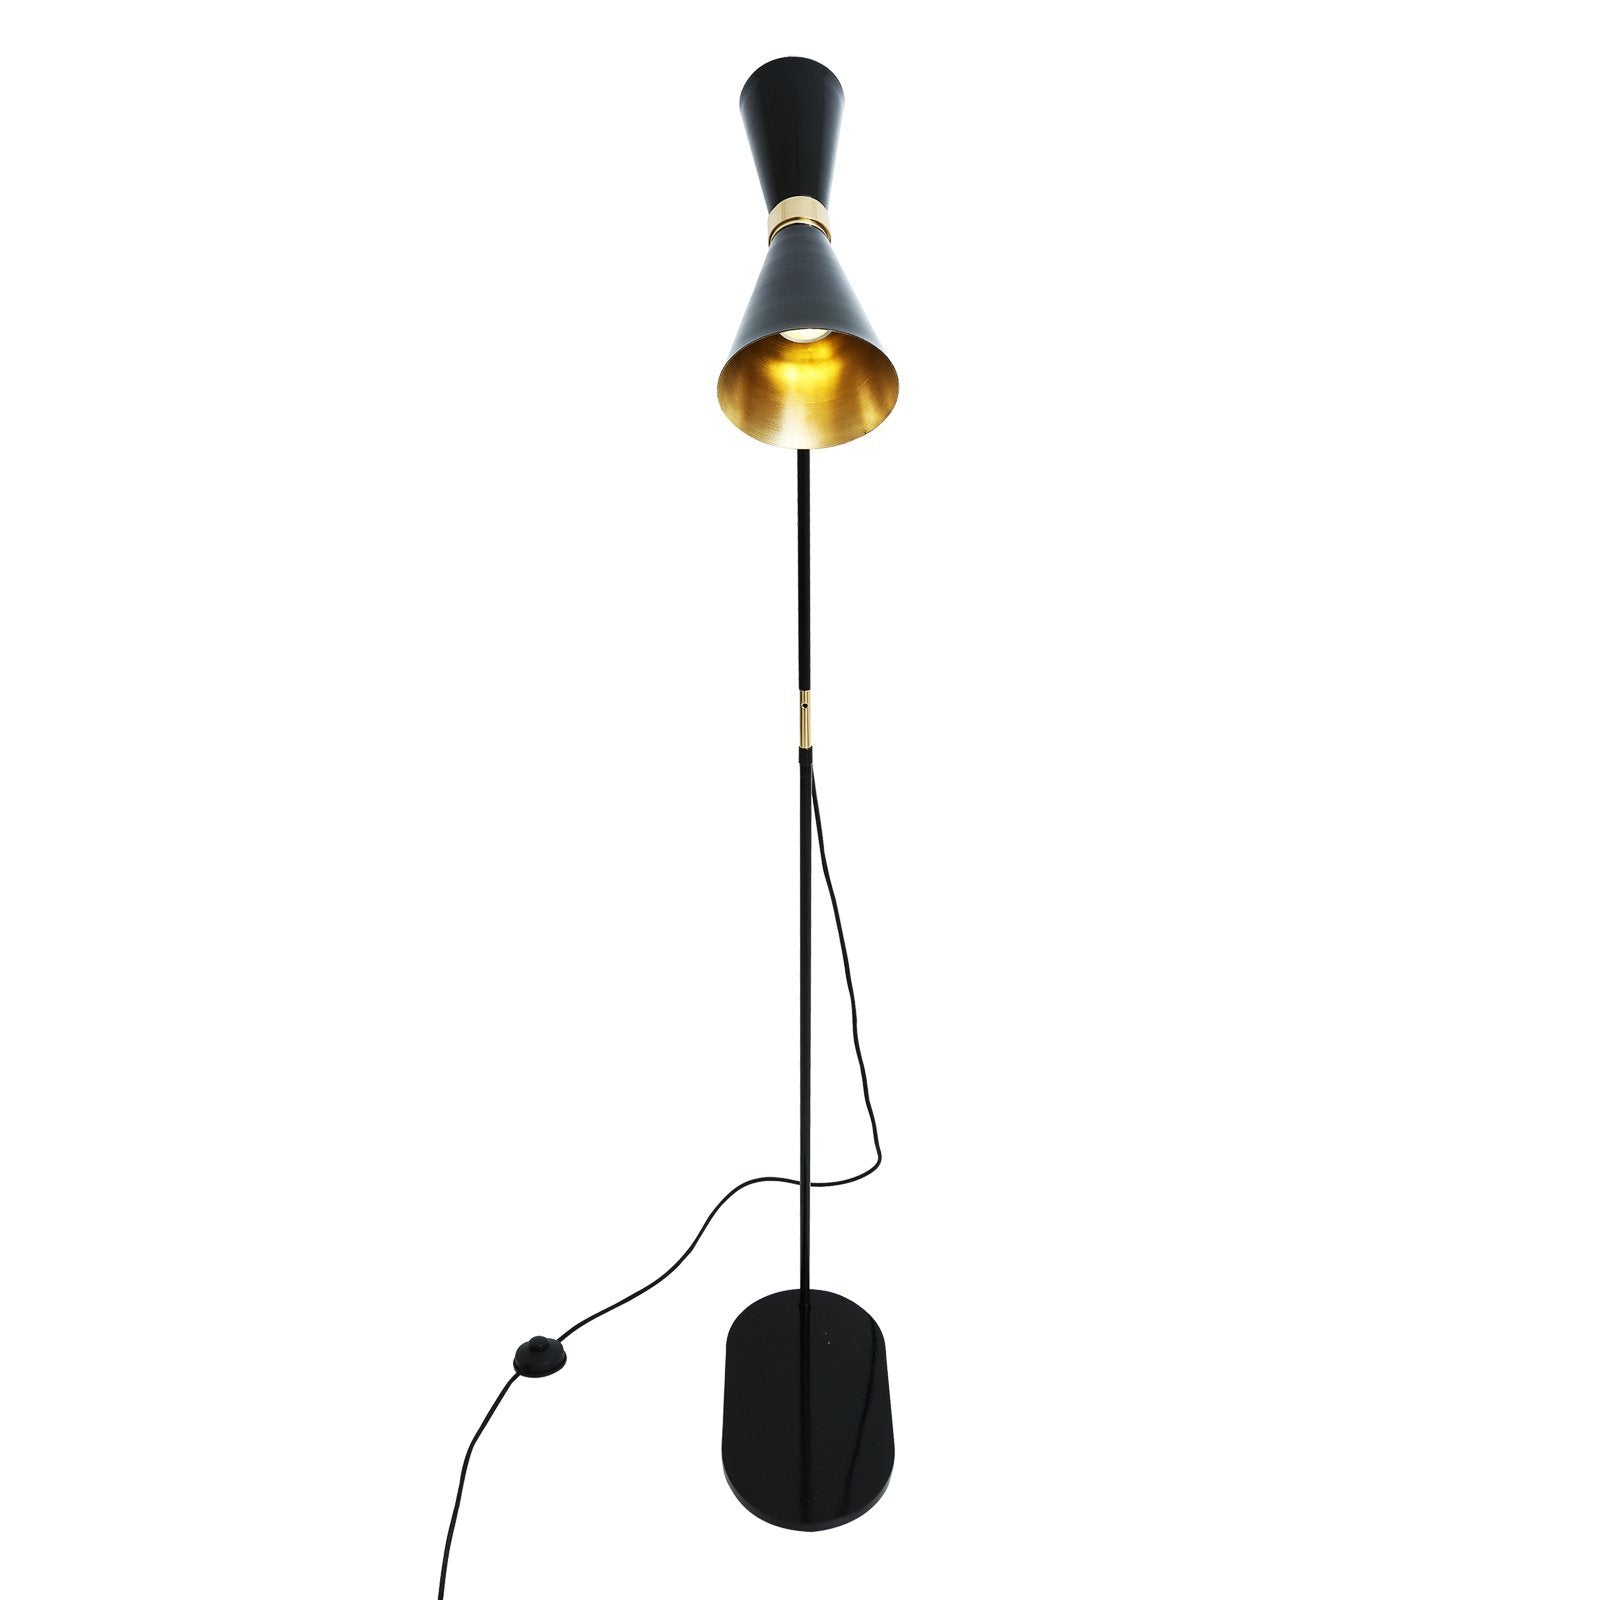 Contemporary chandelier - CAIRO MID-CENTURY - Mullan Lighting - brass / 8  light / commercial